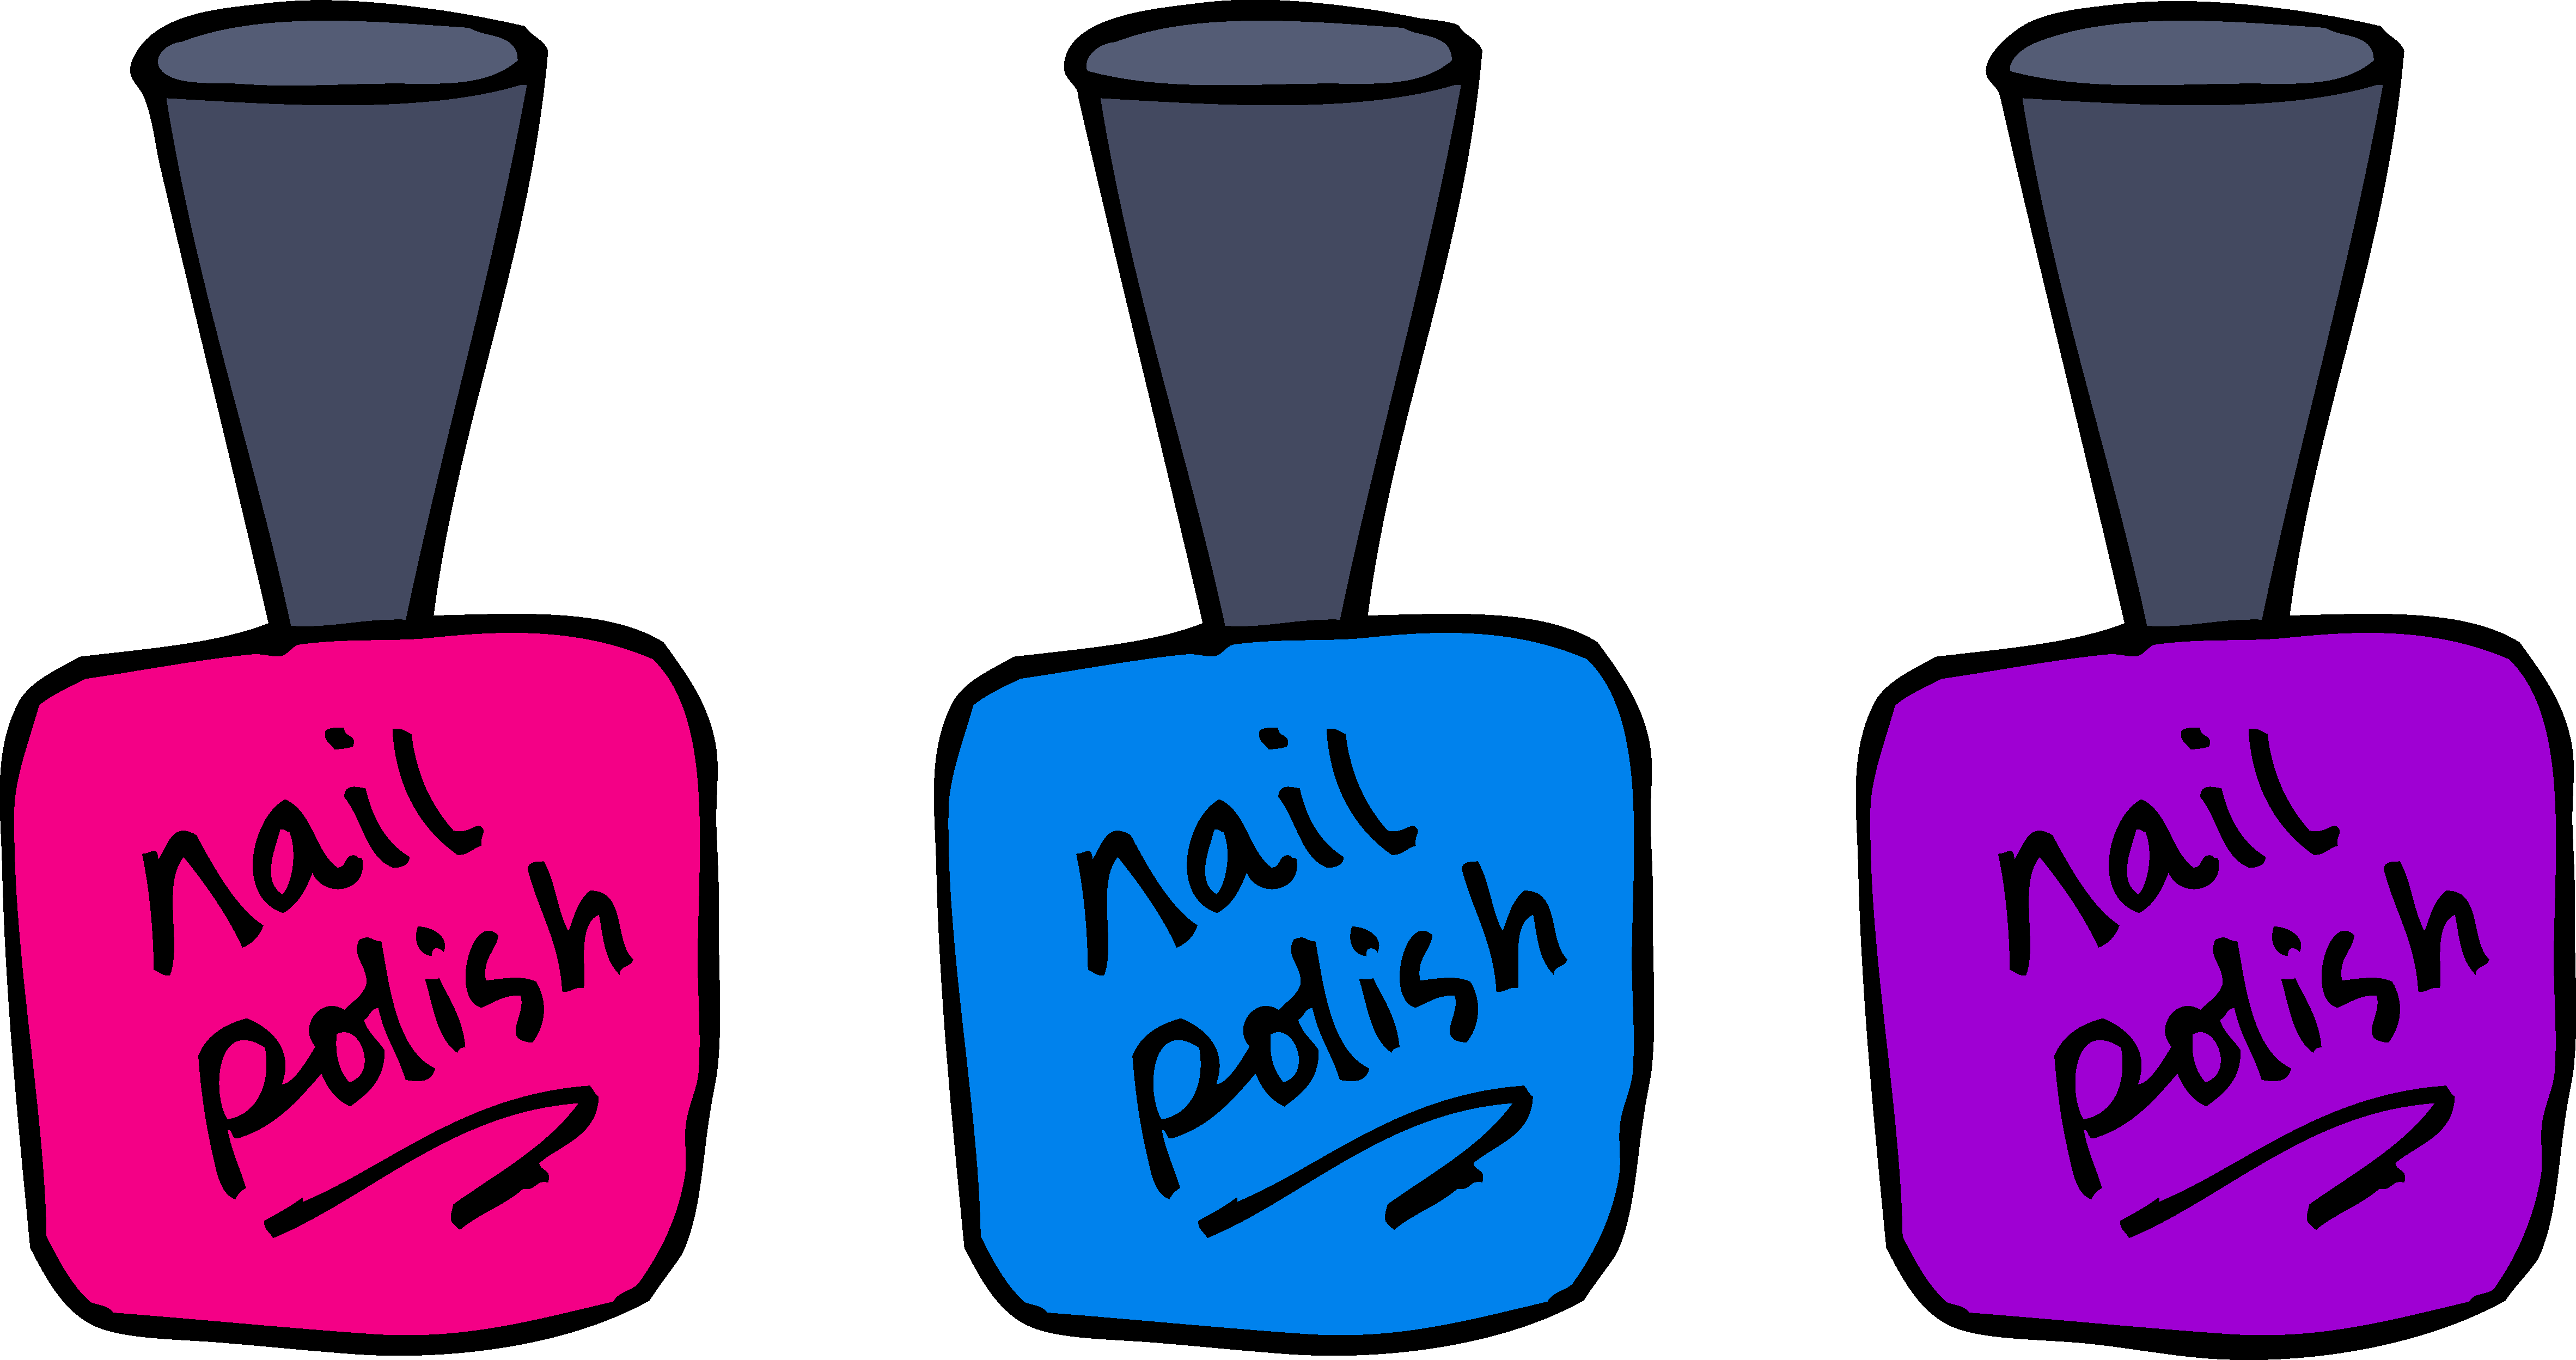 10. Nail polish bottle silhouette clip art transparent background - wide 2